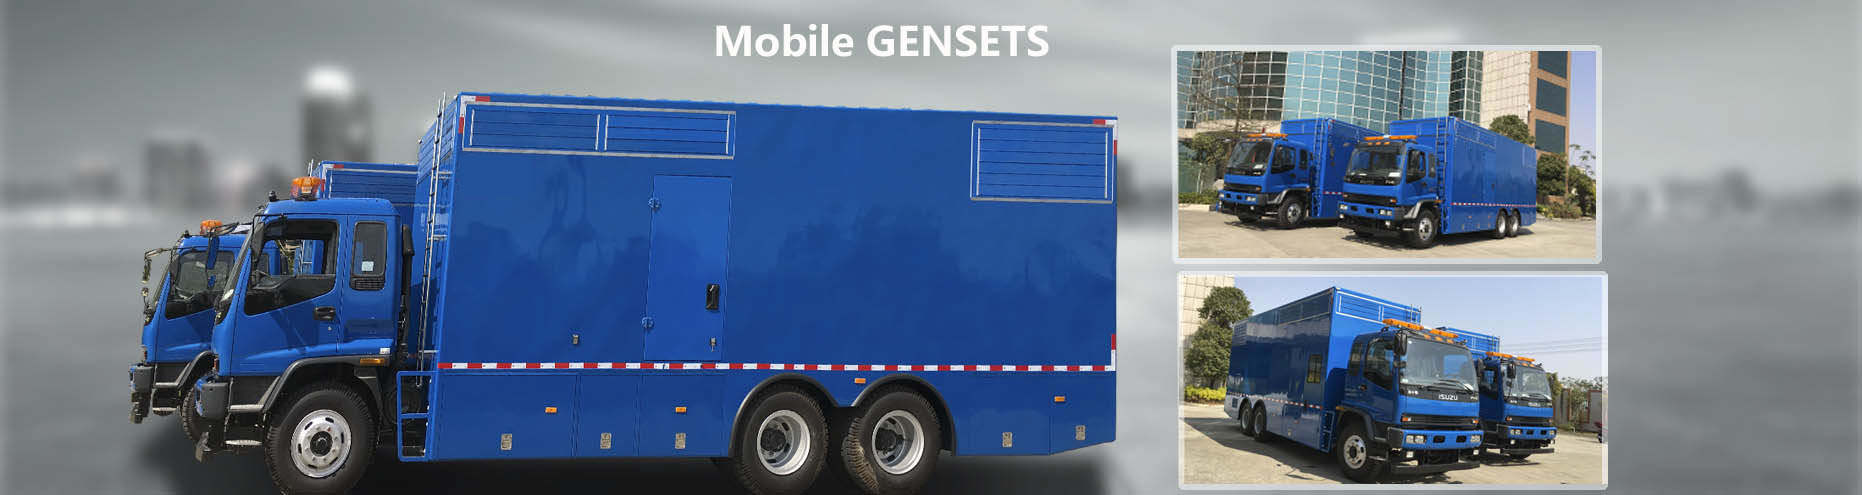 Mobile GENSETS